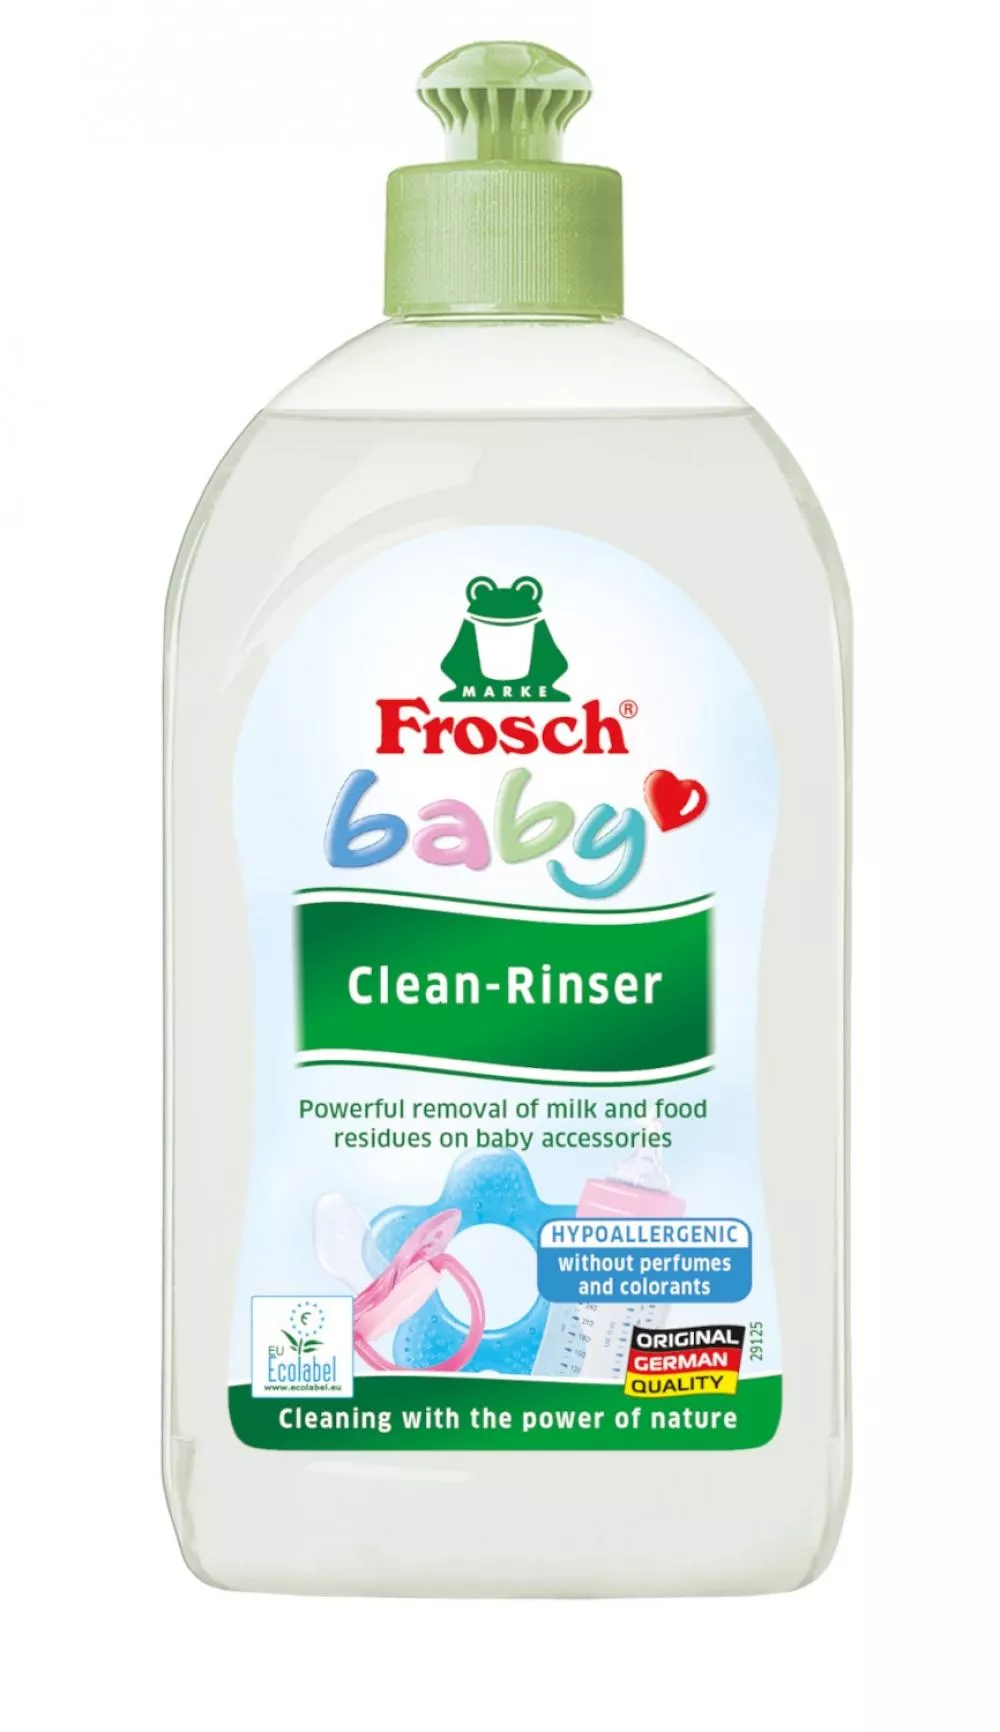 Frosch EKO Baby Hypoallergenic baby and children's laundry soap (750ml)